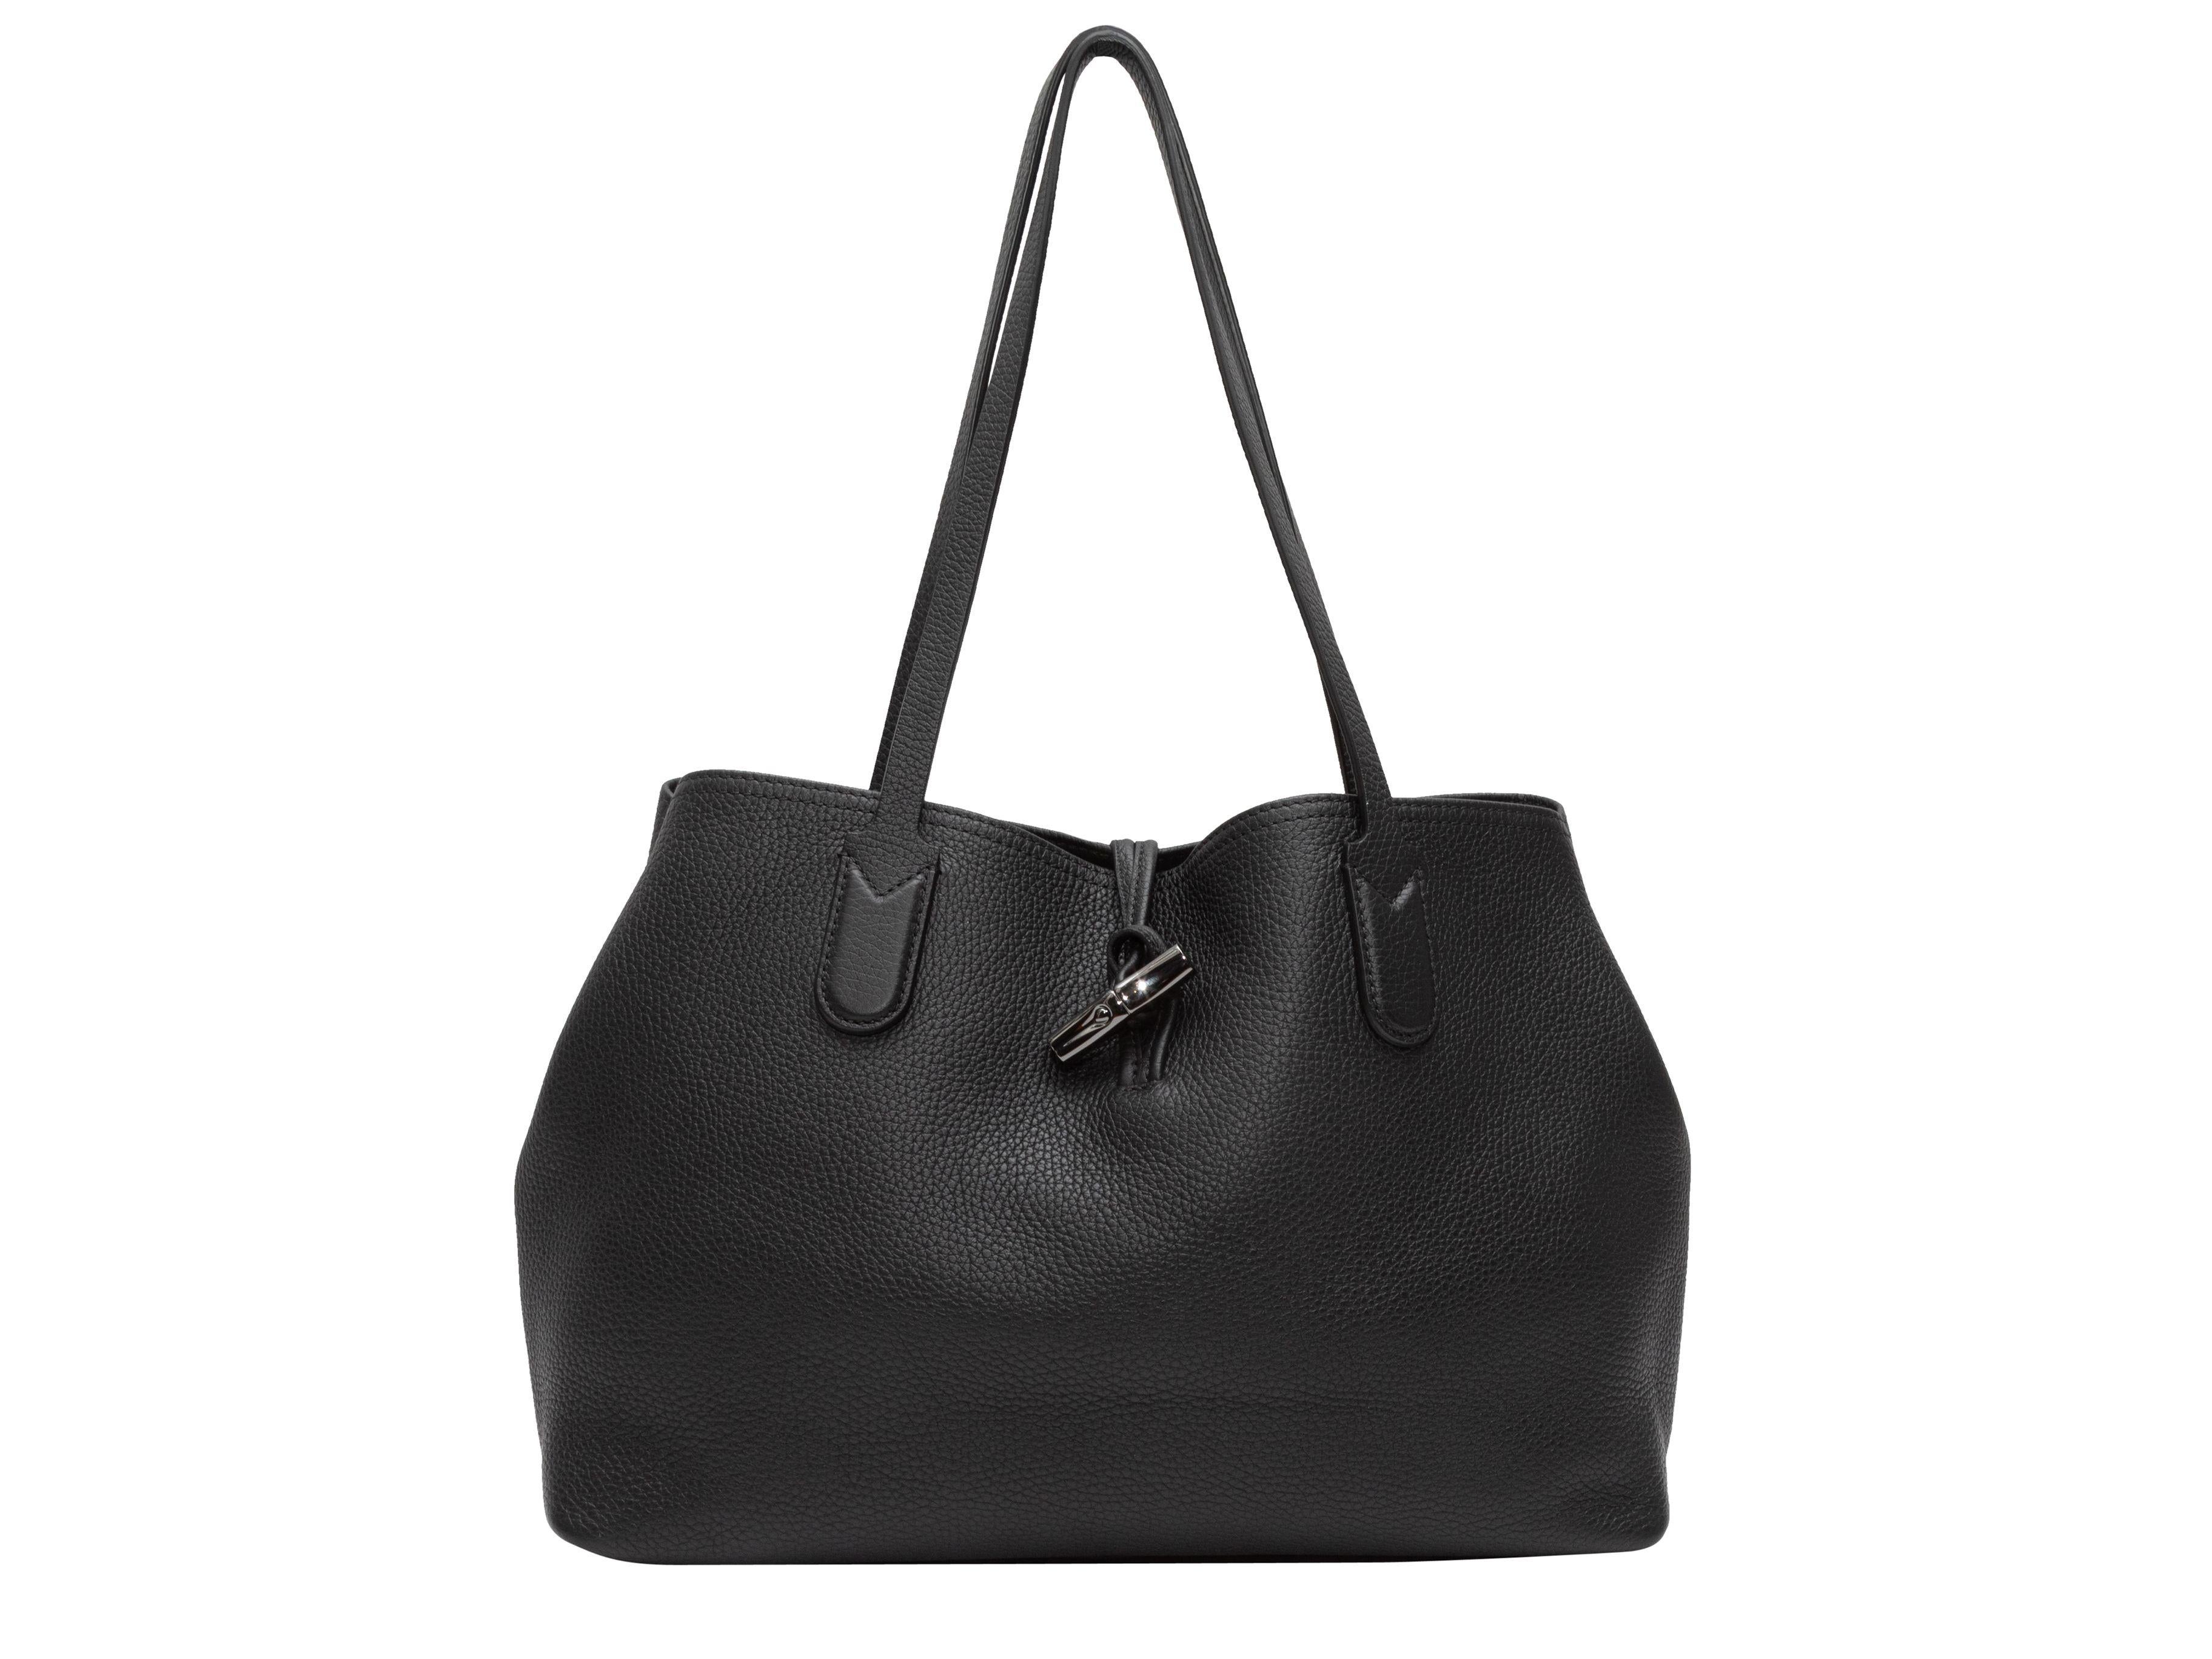 Longchamp Black Leather Tote Bag 1